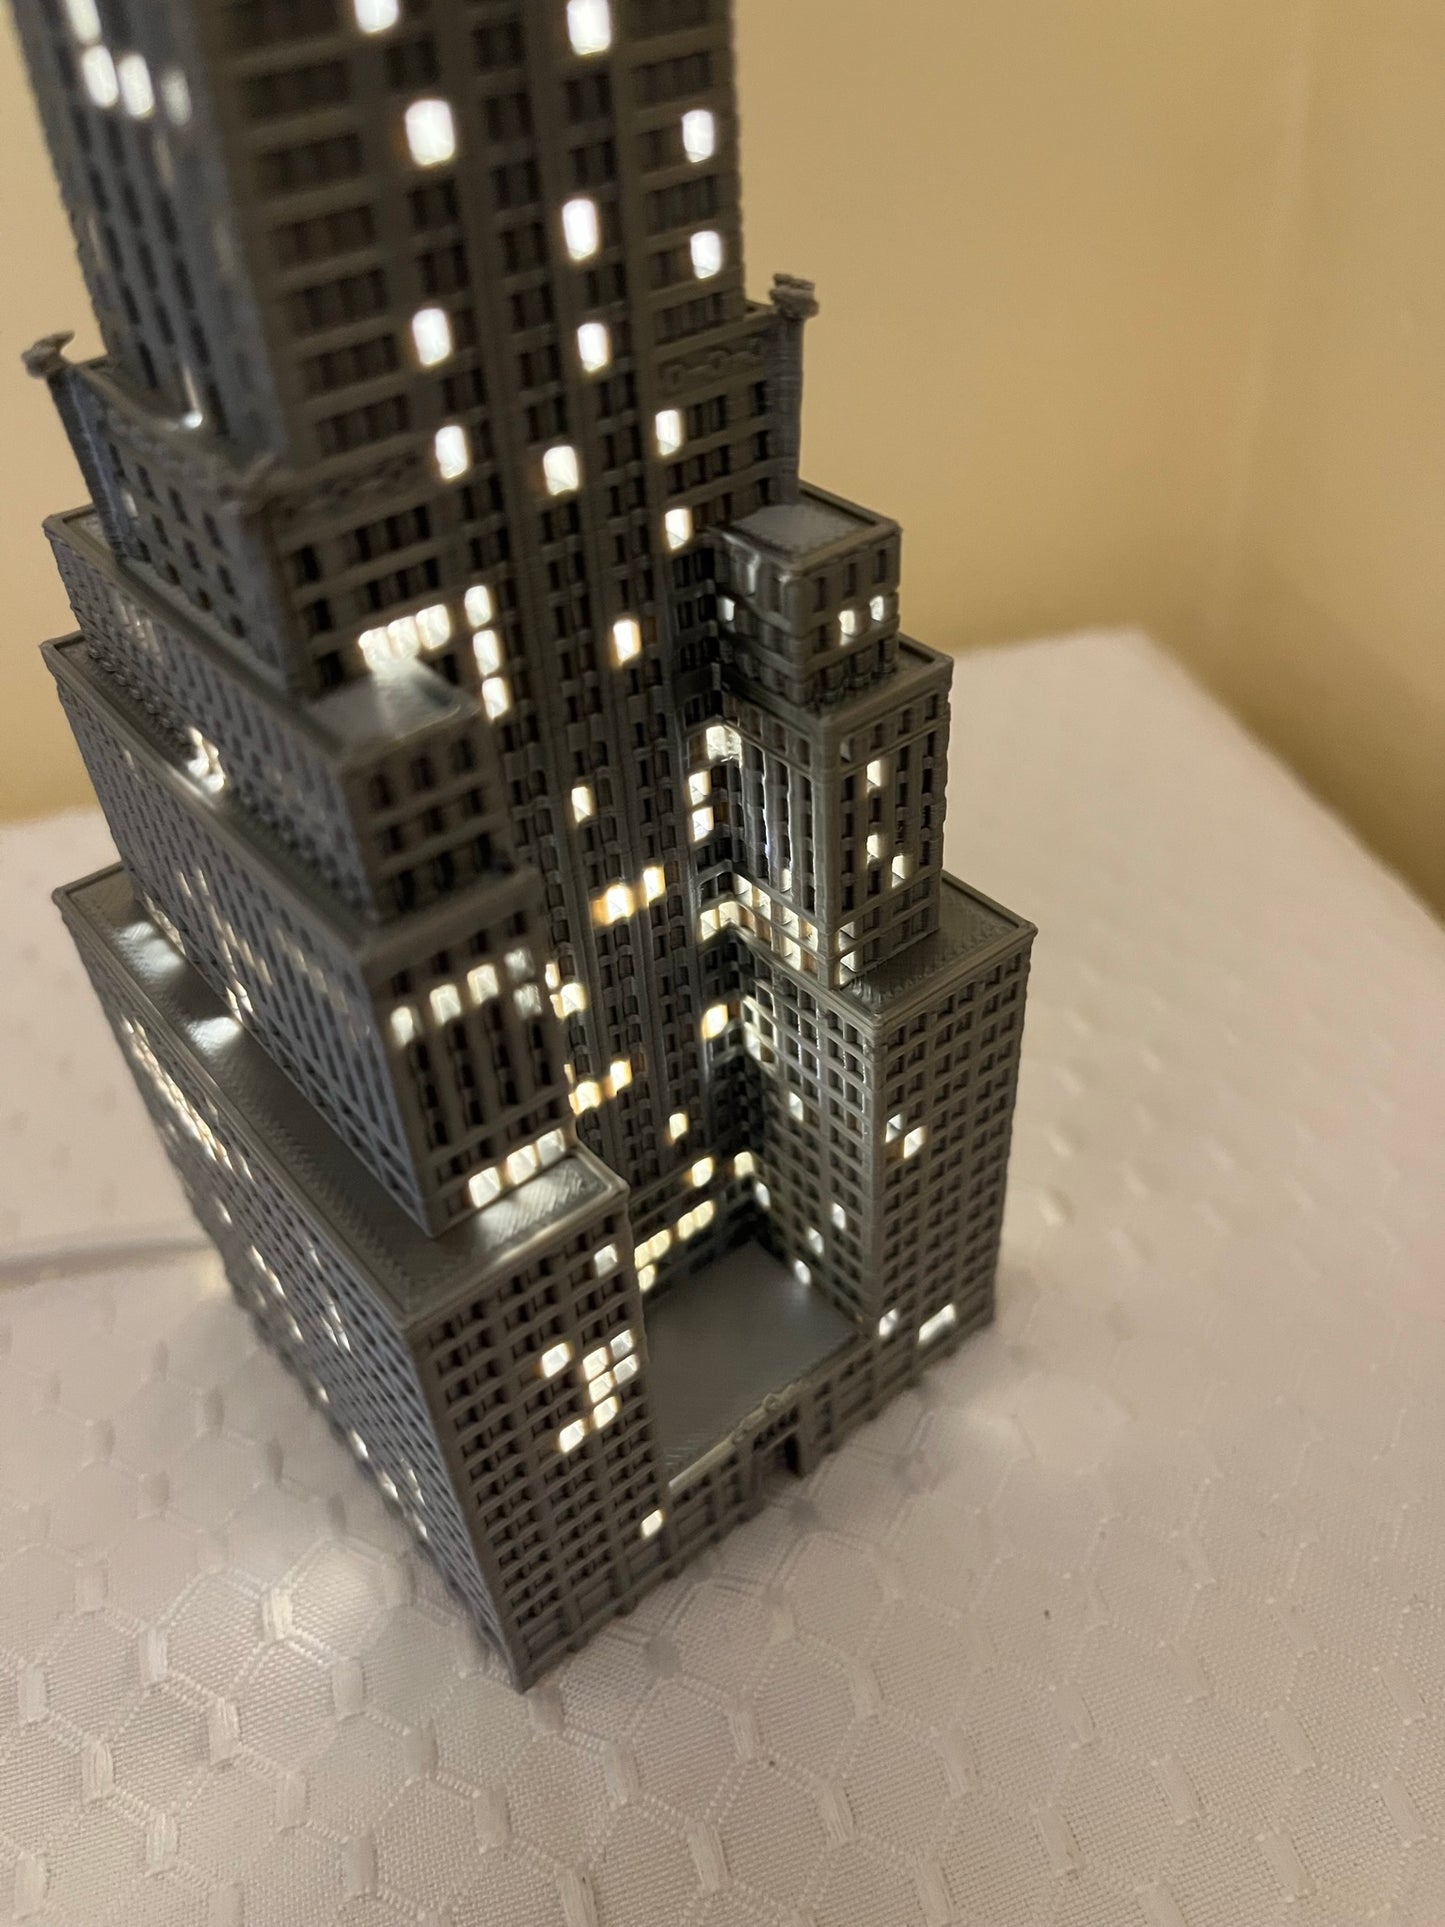 Chrysler Building Light Up Model Small- 3D Printed